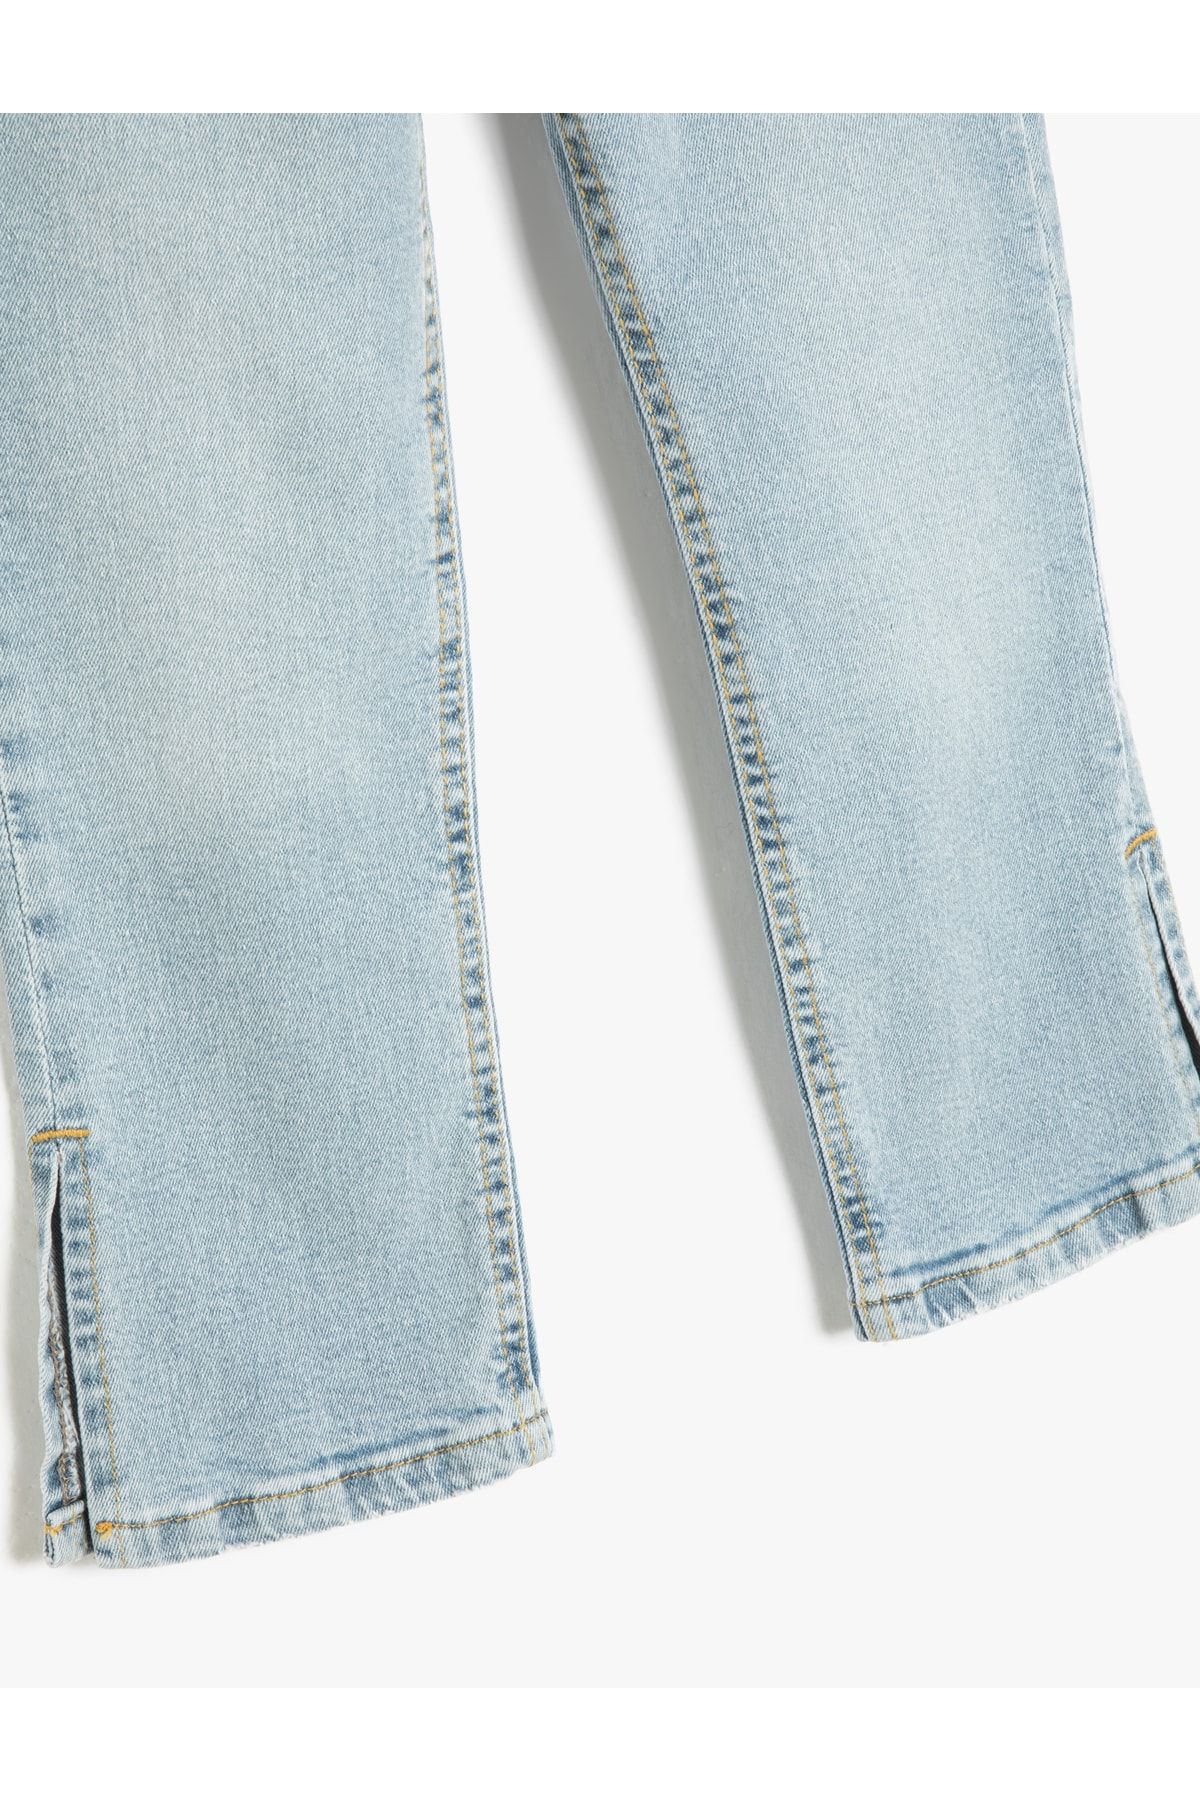 Koton شلوار جین با جزئیات چاک دار، جیب، نخی، کمر الاستیک قابل تنظیم - باریک